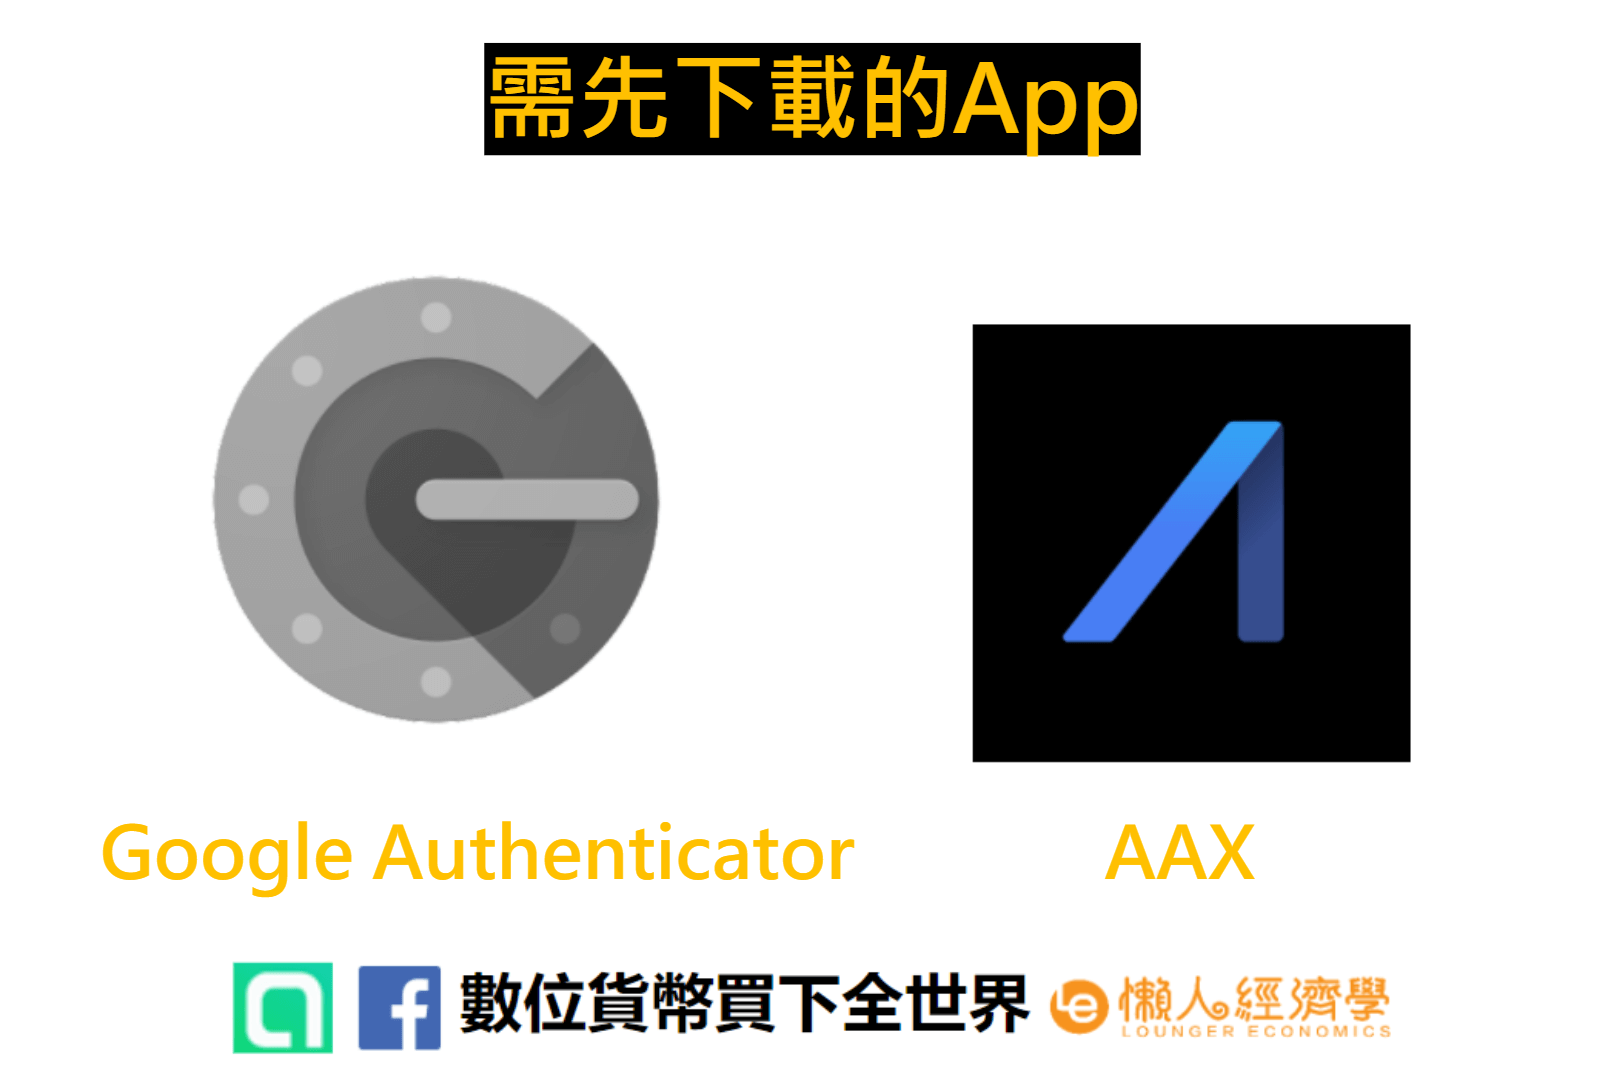 AAX交易所註冊：下載AAX app 和谷歌驗證器